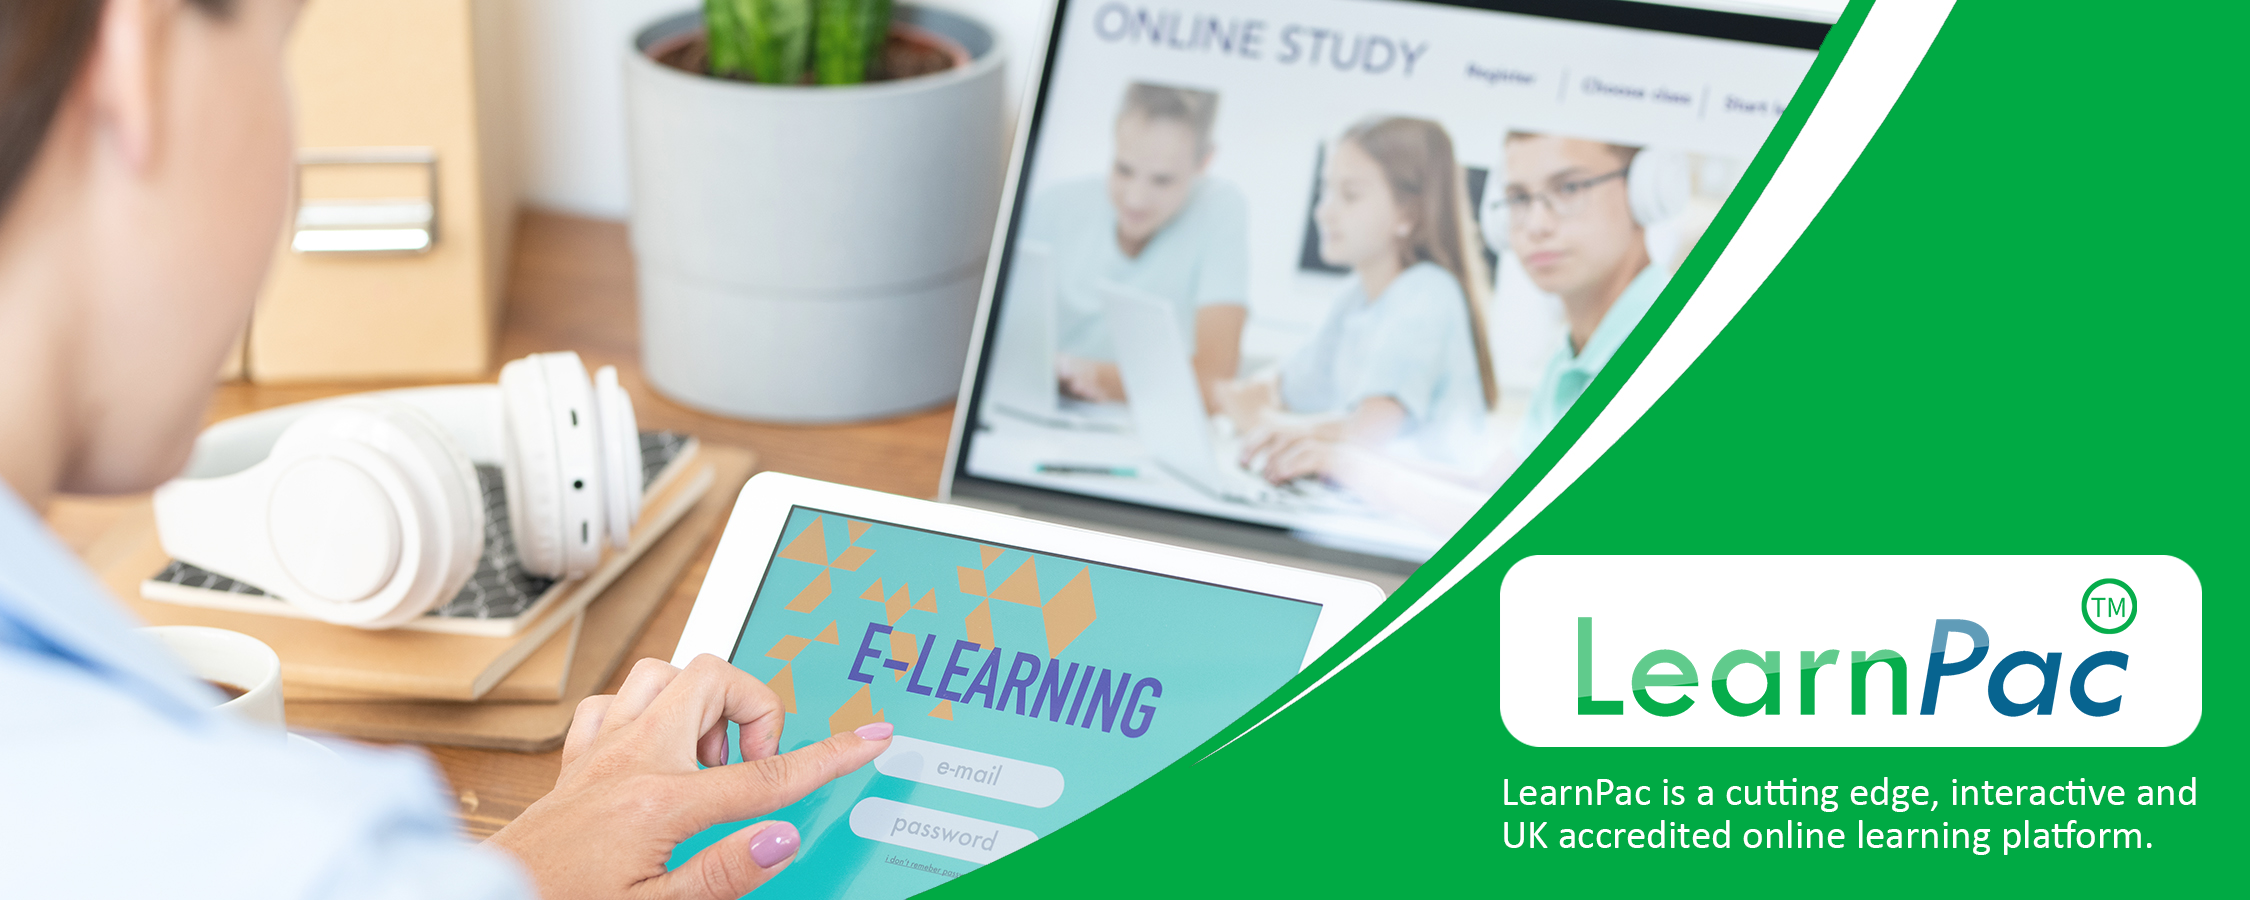 CSTF Newborn Life Support - Resuscitation - Online Learning Courses - E-Learning Courses - LearnPac Systems UK -